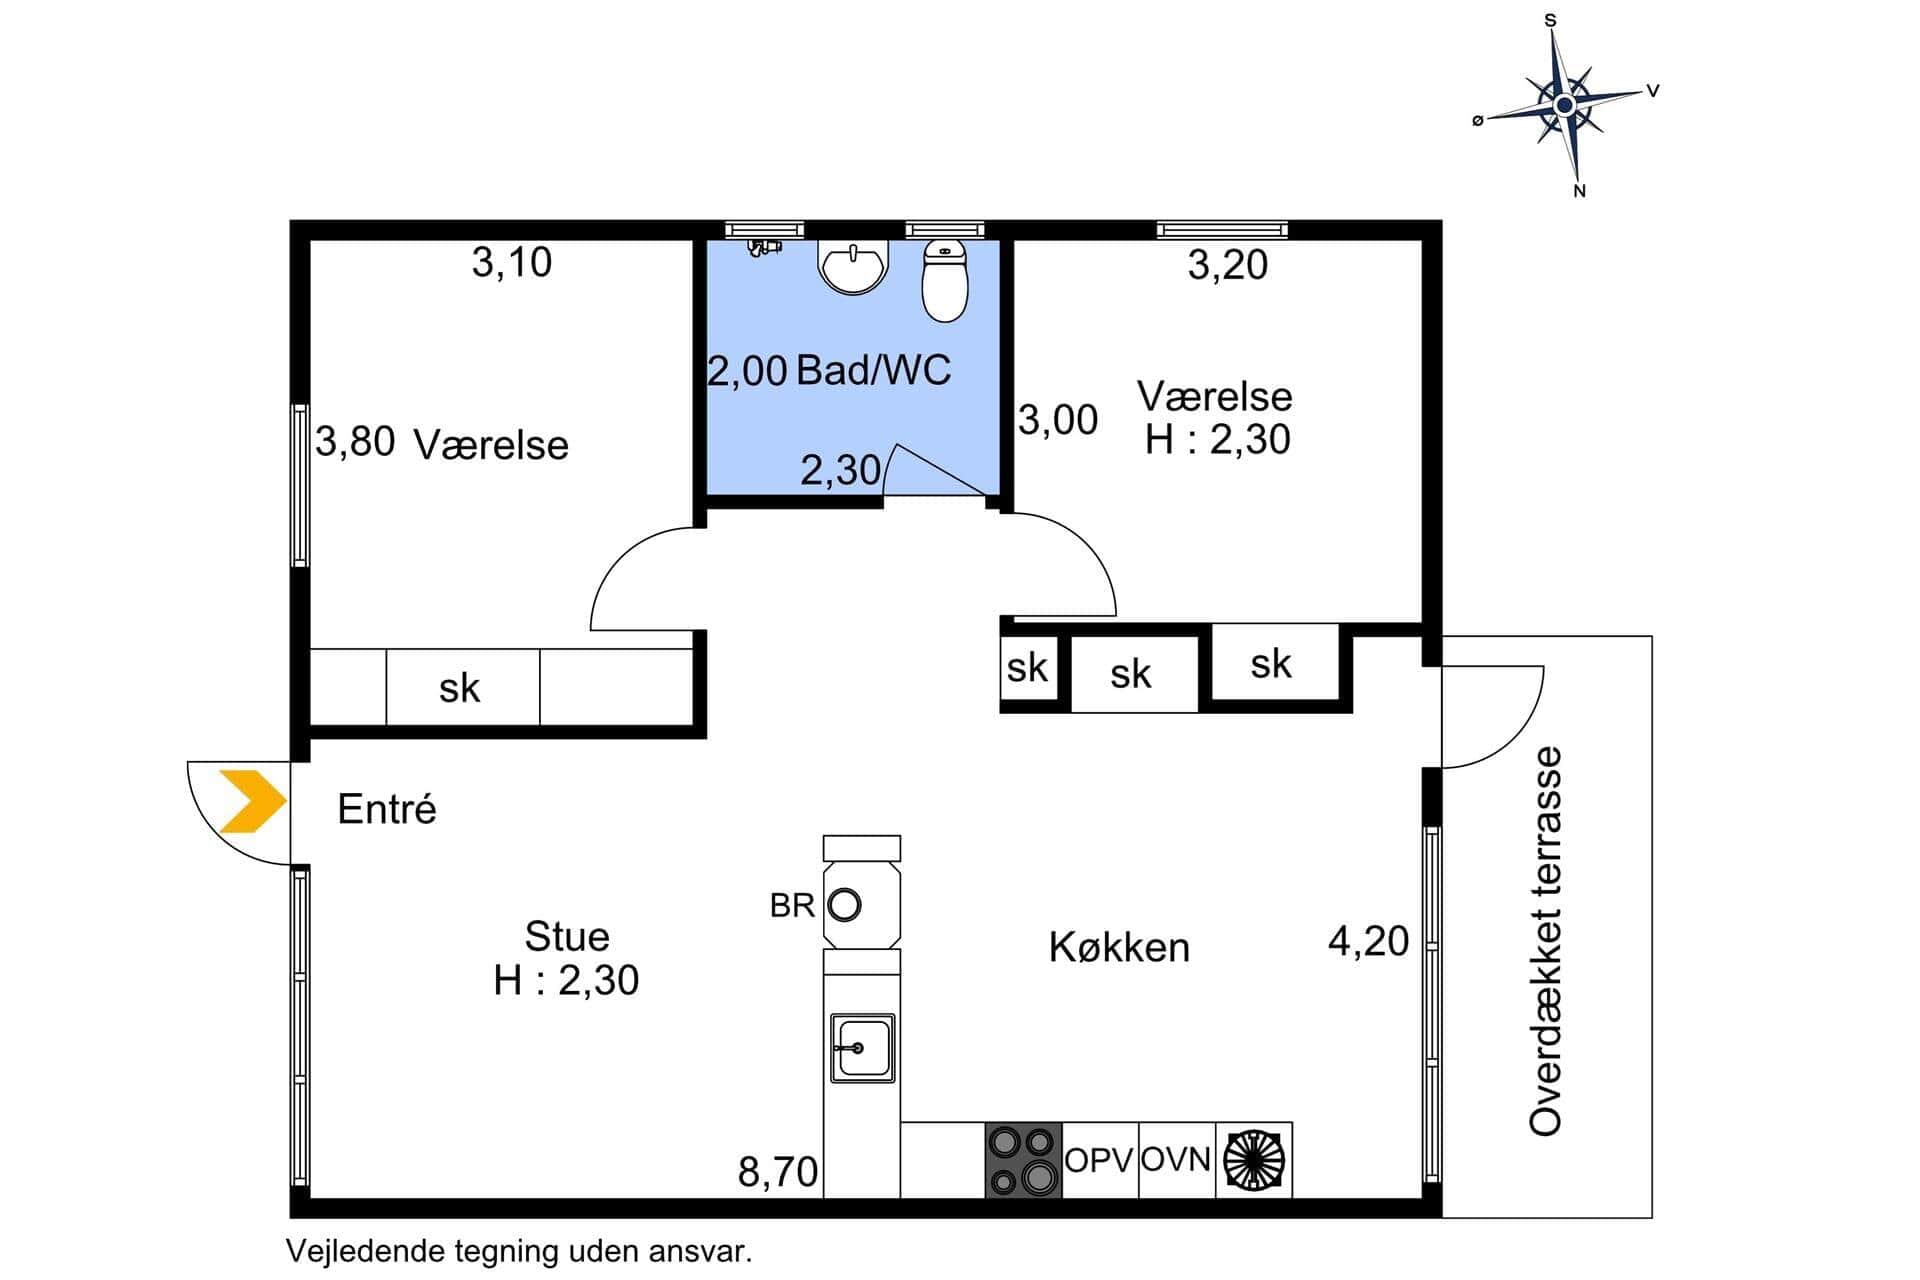 Interieur 17-174 Vakantiehuis M15020, Bøtølundvej 124, DK - 4873 Væggerløse